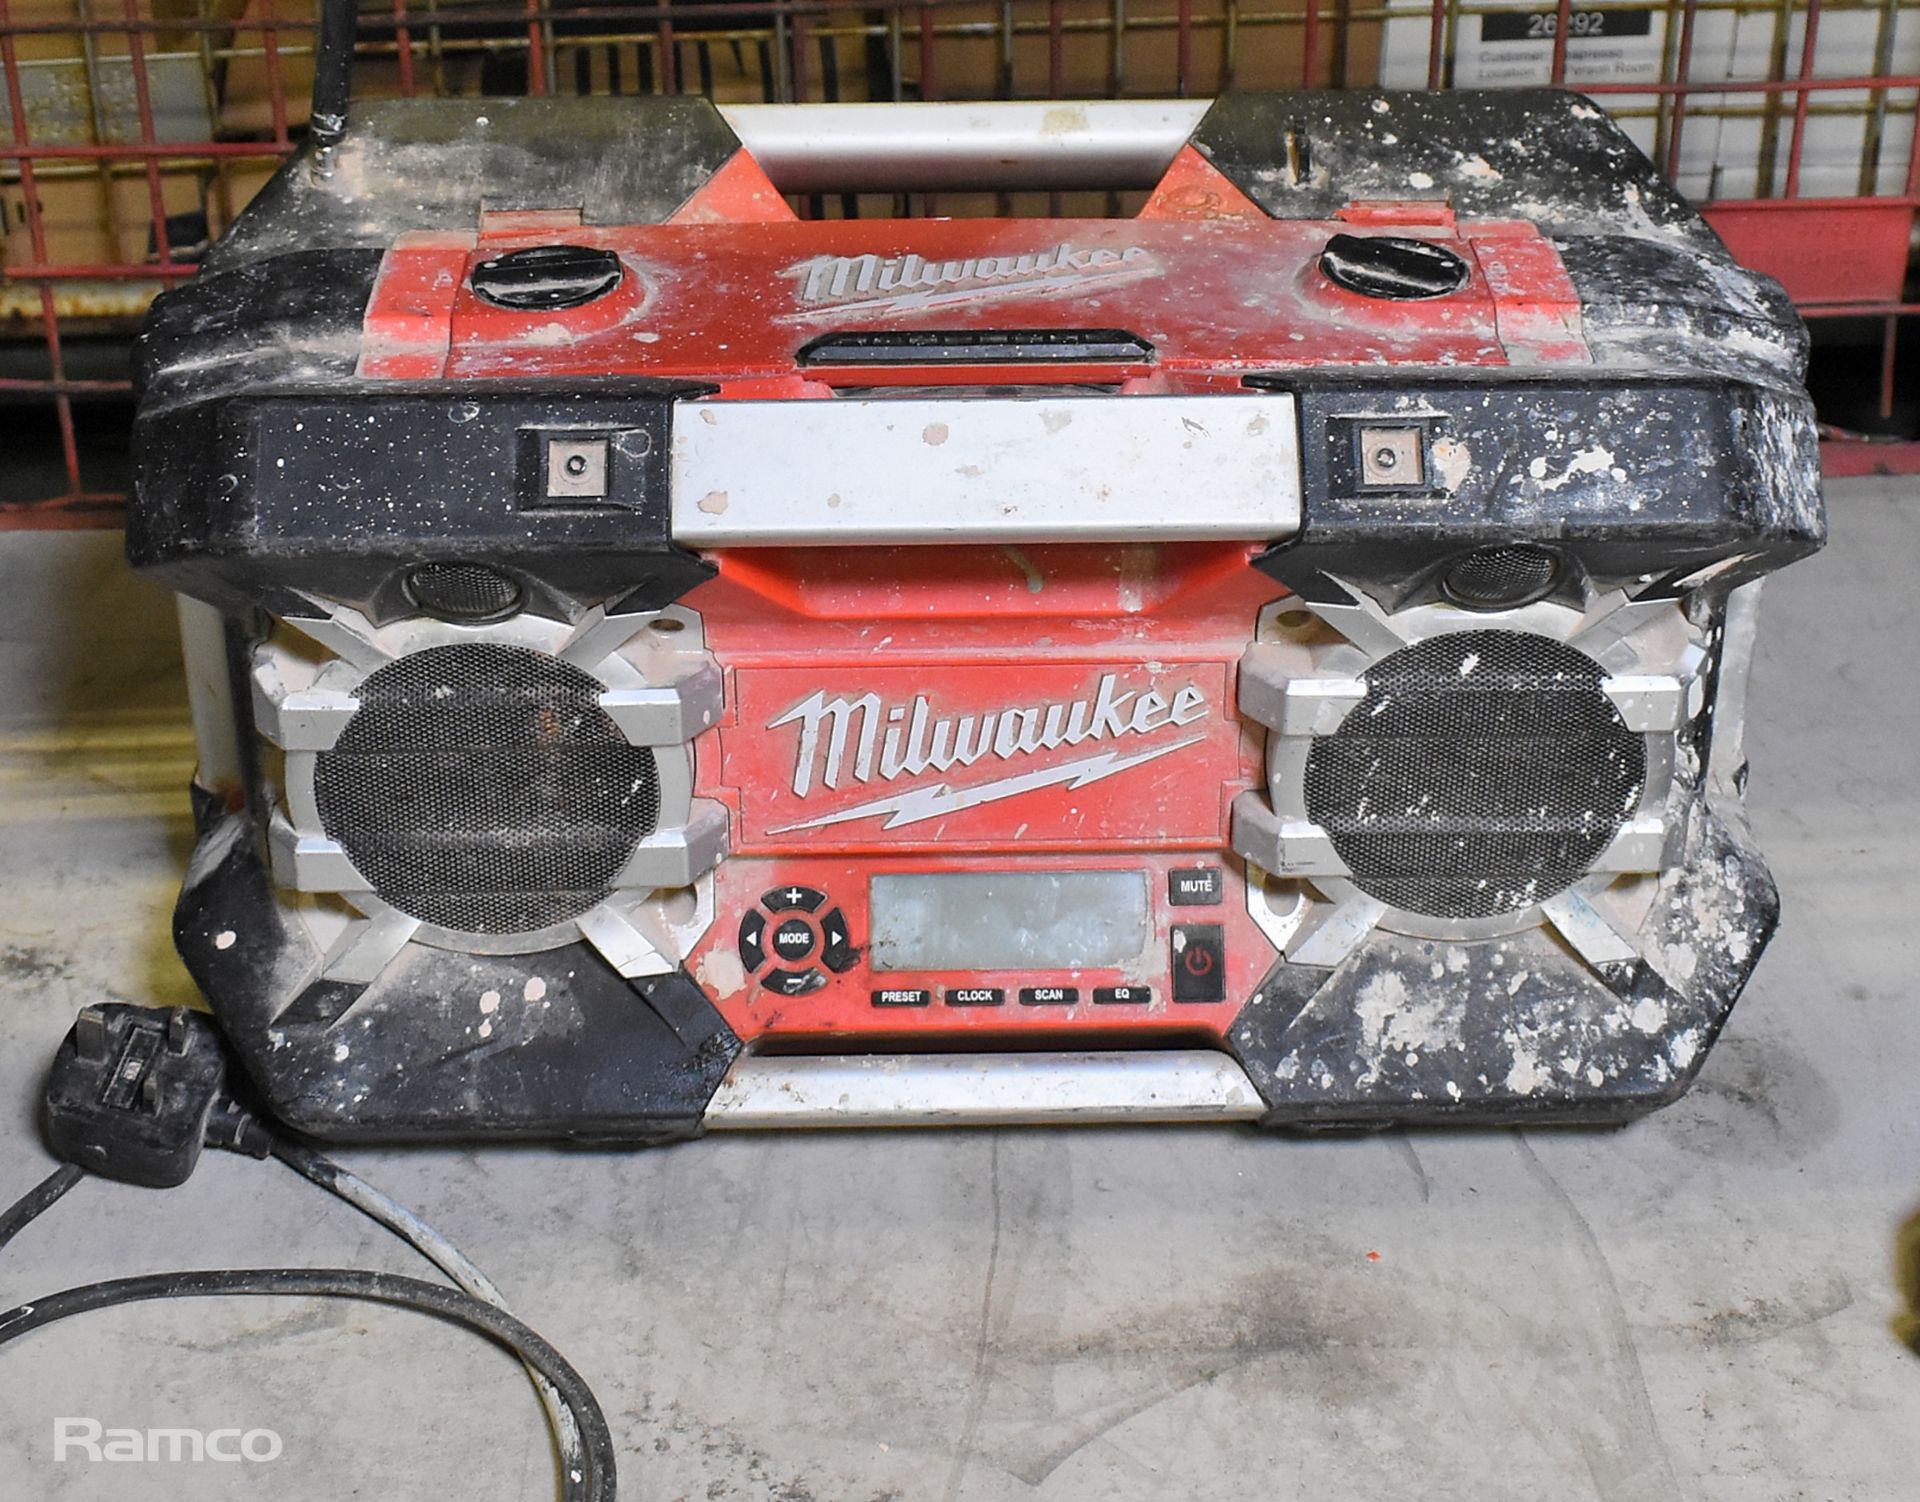 Cordless power tools - Milwaukee, Dewalt and Makita and Milwaukee C1228 DCR radio - Image 9 of 10